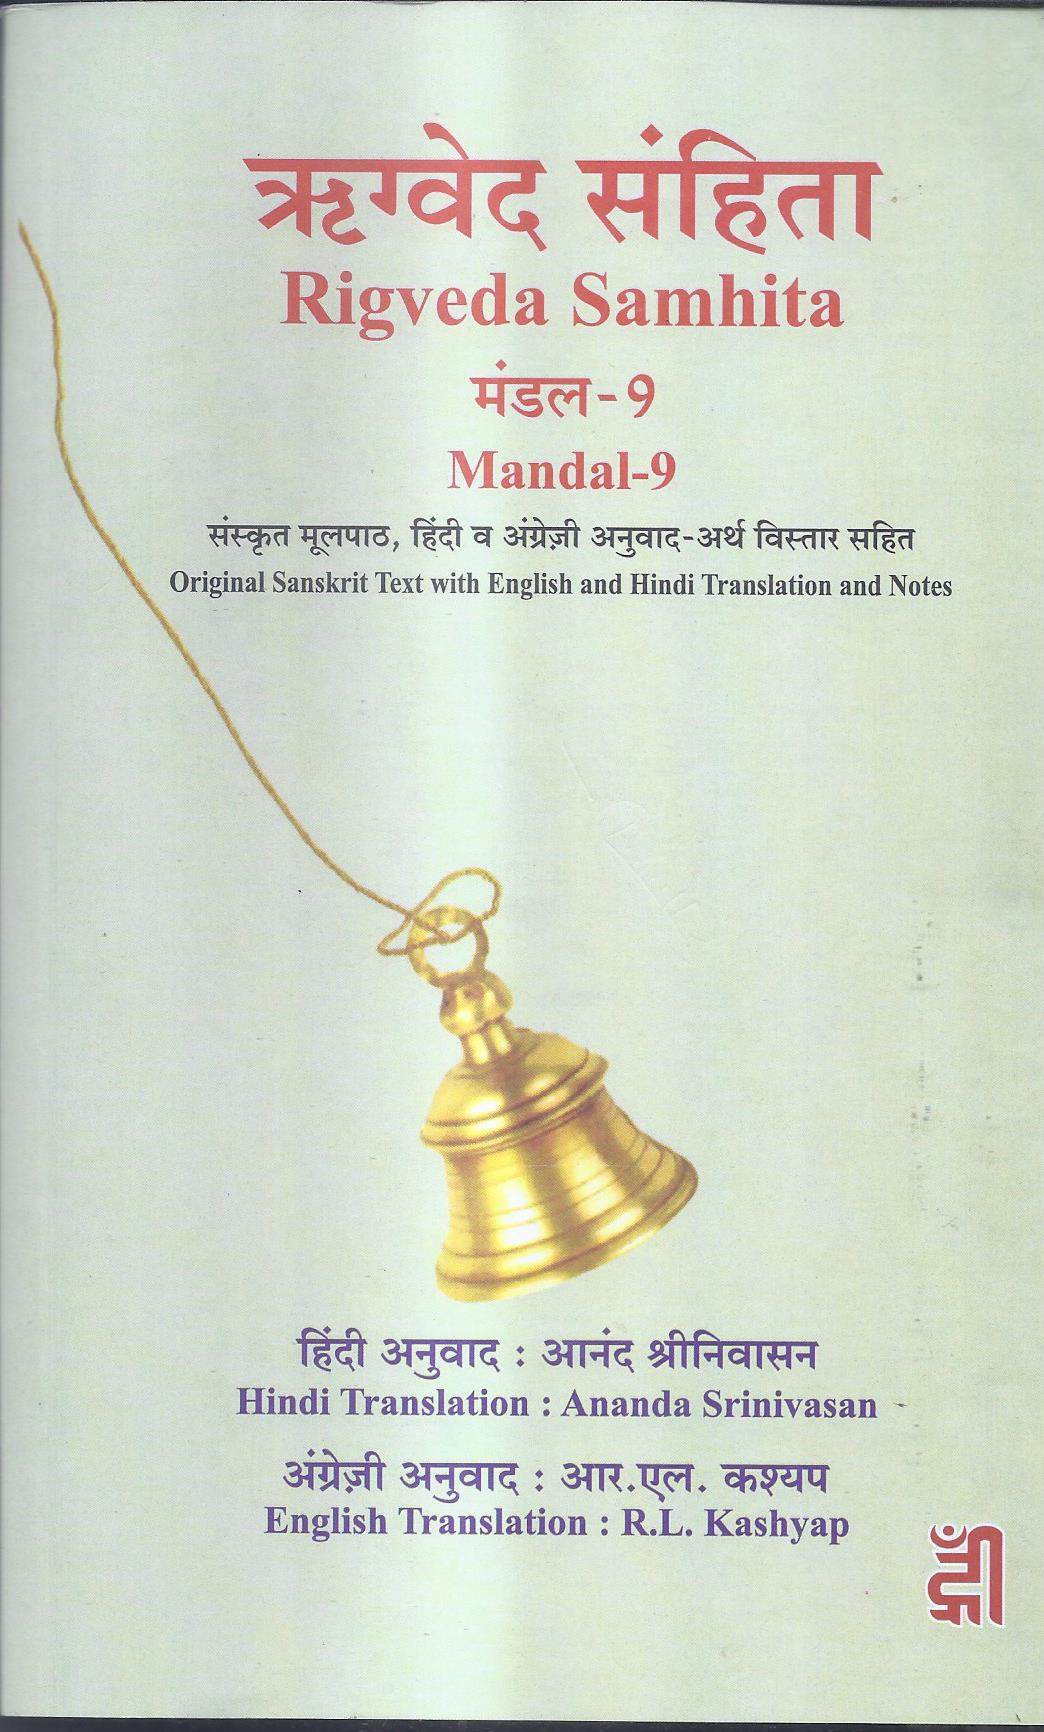 Rigveda Samhita Mandala-9